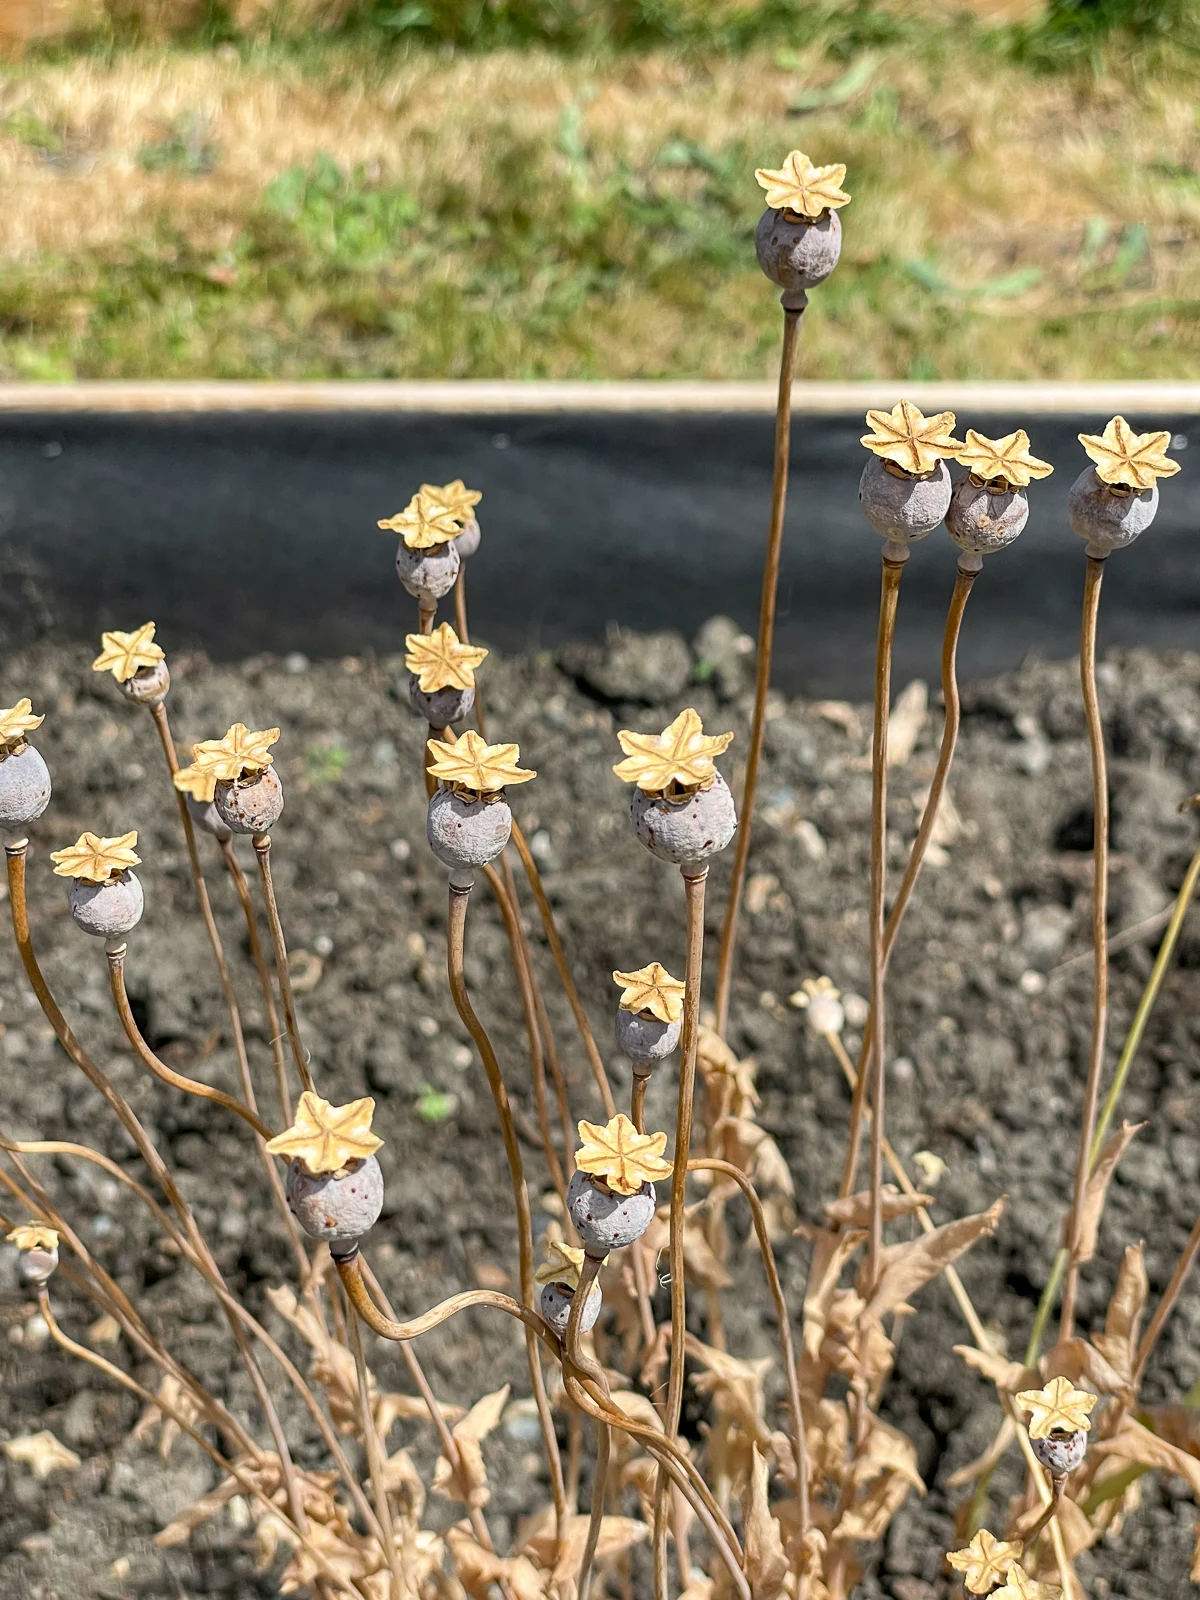 poppy seed pods in garden bed